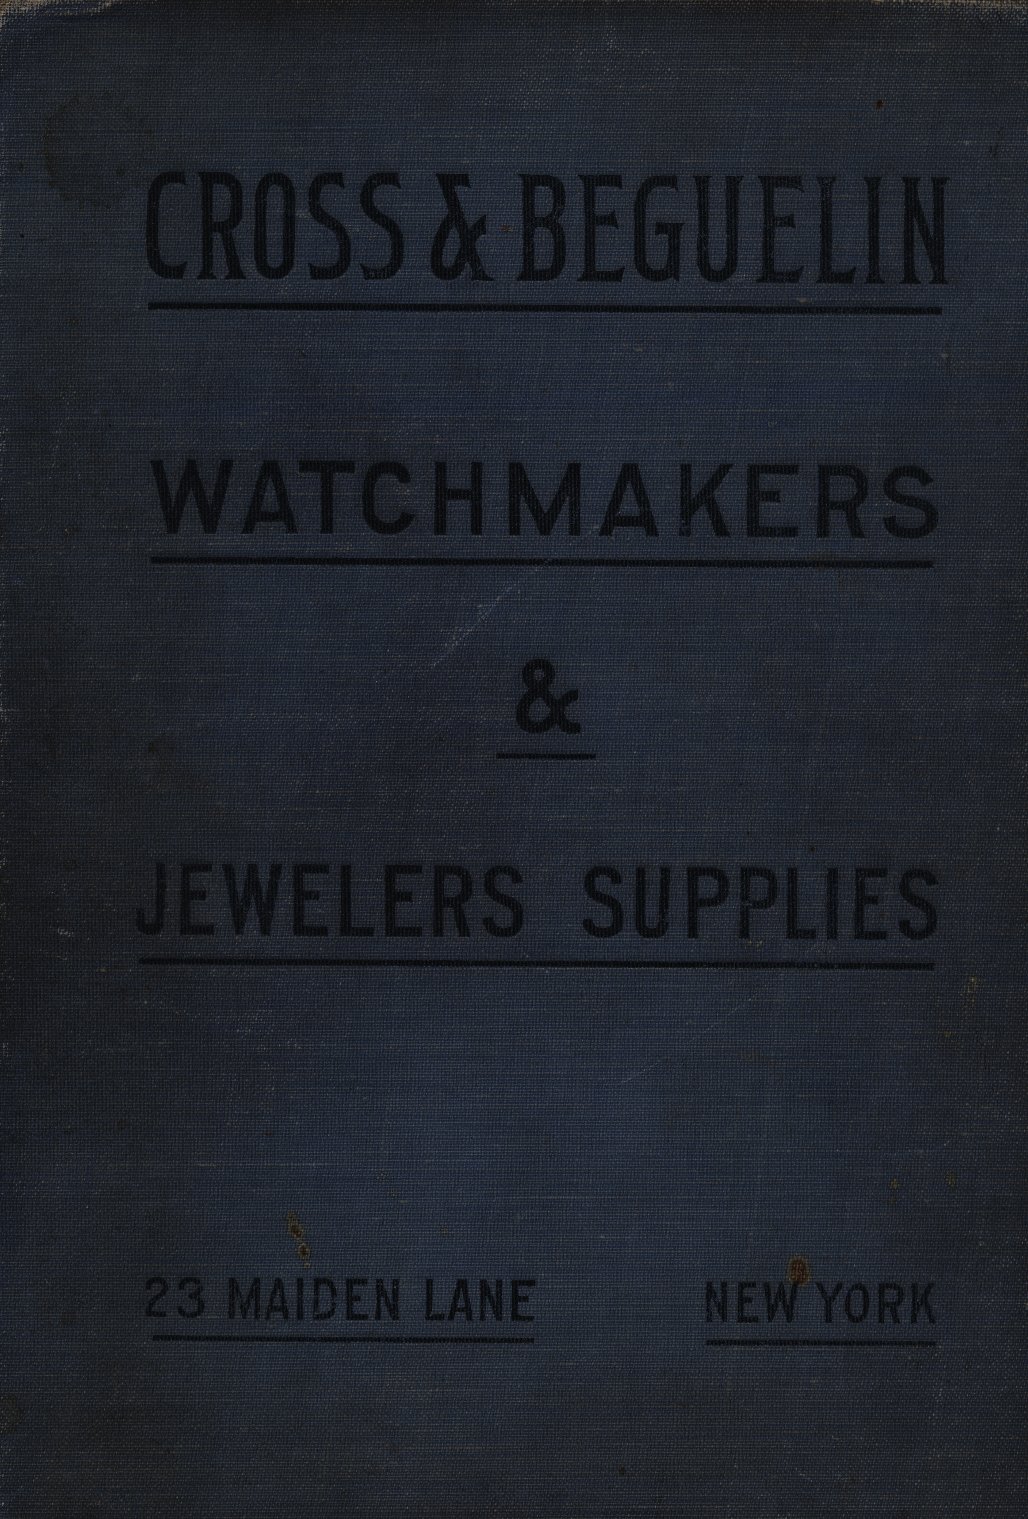 Cross & Beguelin Watchmakers & Jewelers Supplies: New York Standard (c.1911) Cover Image